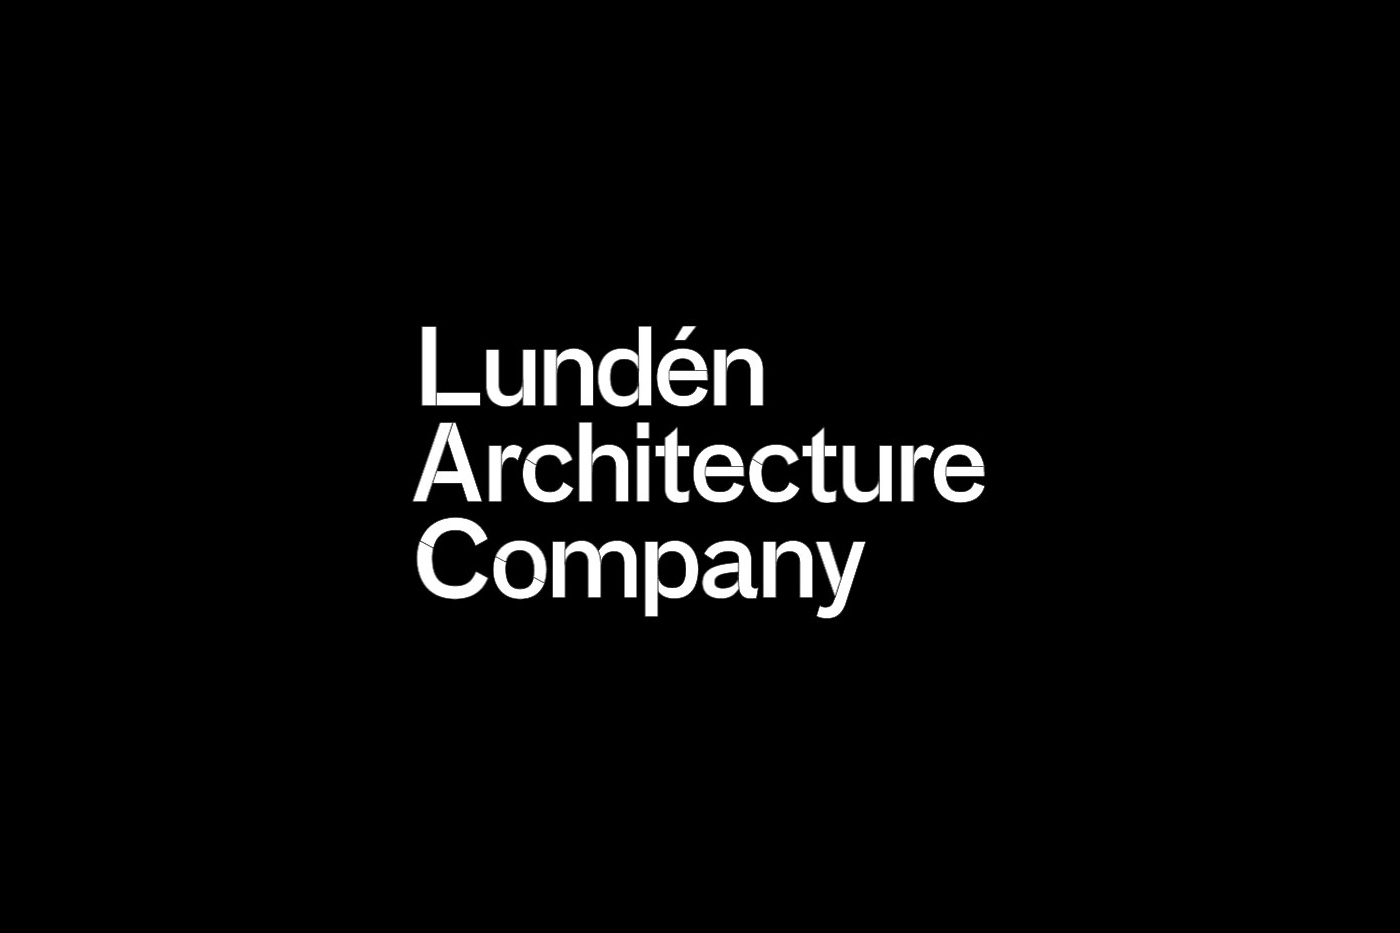 Logotype by Finnish design studio Tsto for Helsinki-based Lundén Architecture Company